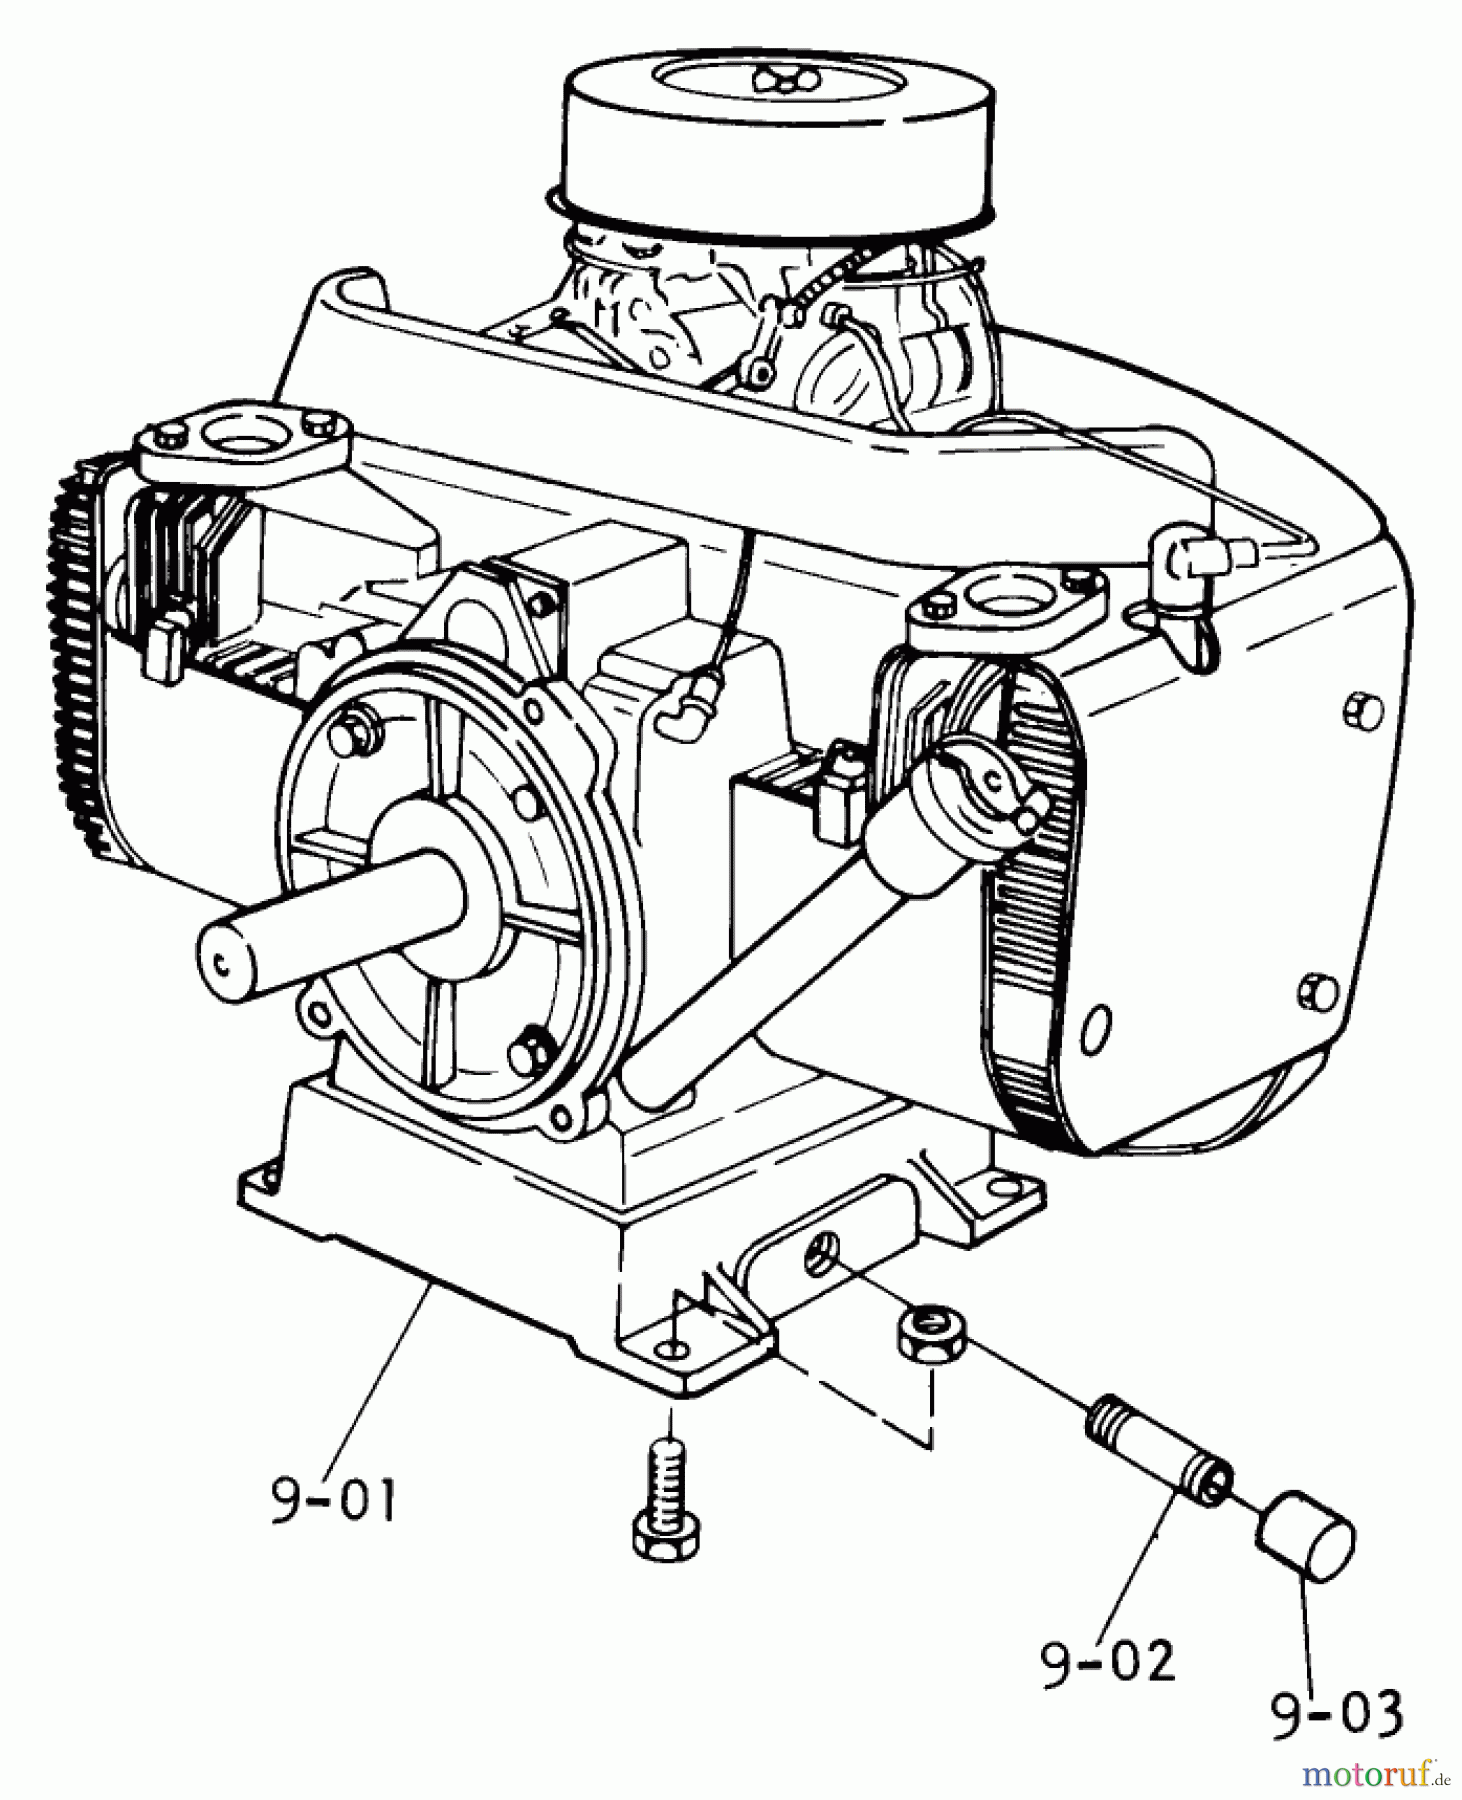  Toro Neu Mowers, Lawn & Garden Tractor Seite 1 1-0610 - Toro 18 hp AutomaticTractor, 1973 ENGINE